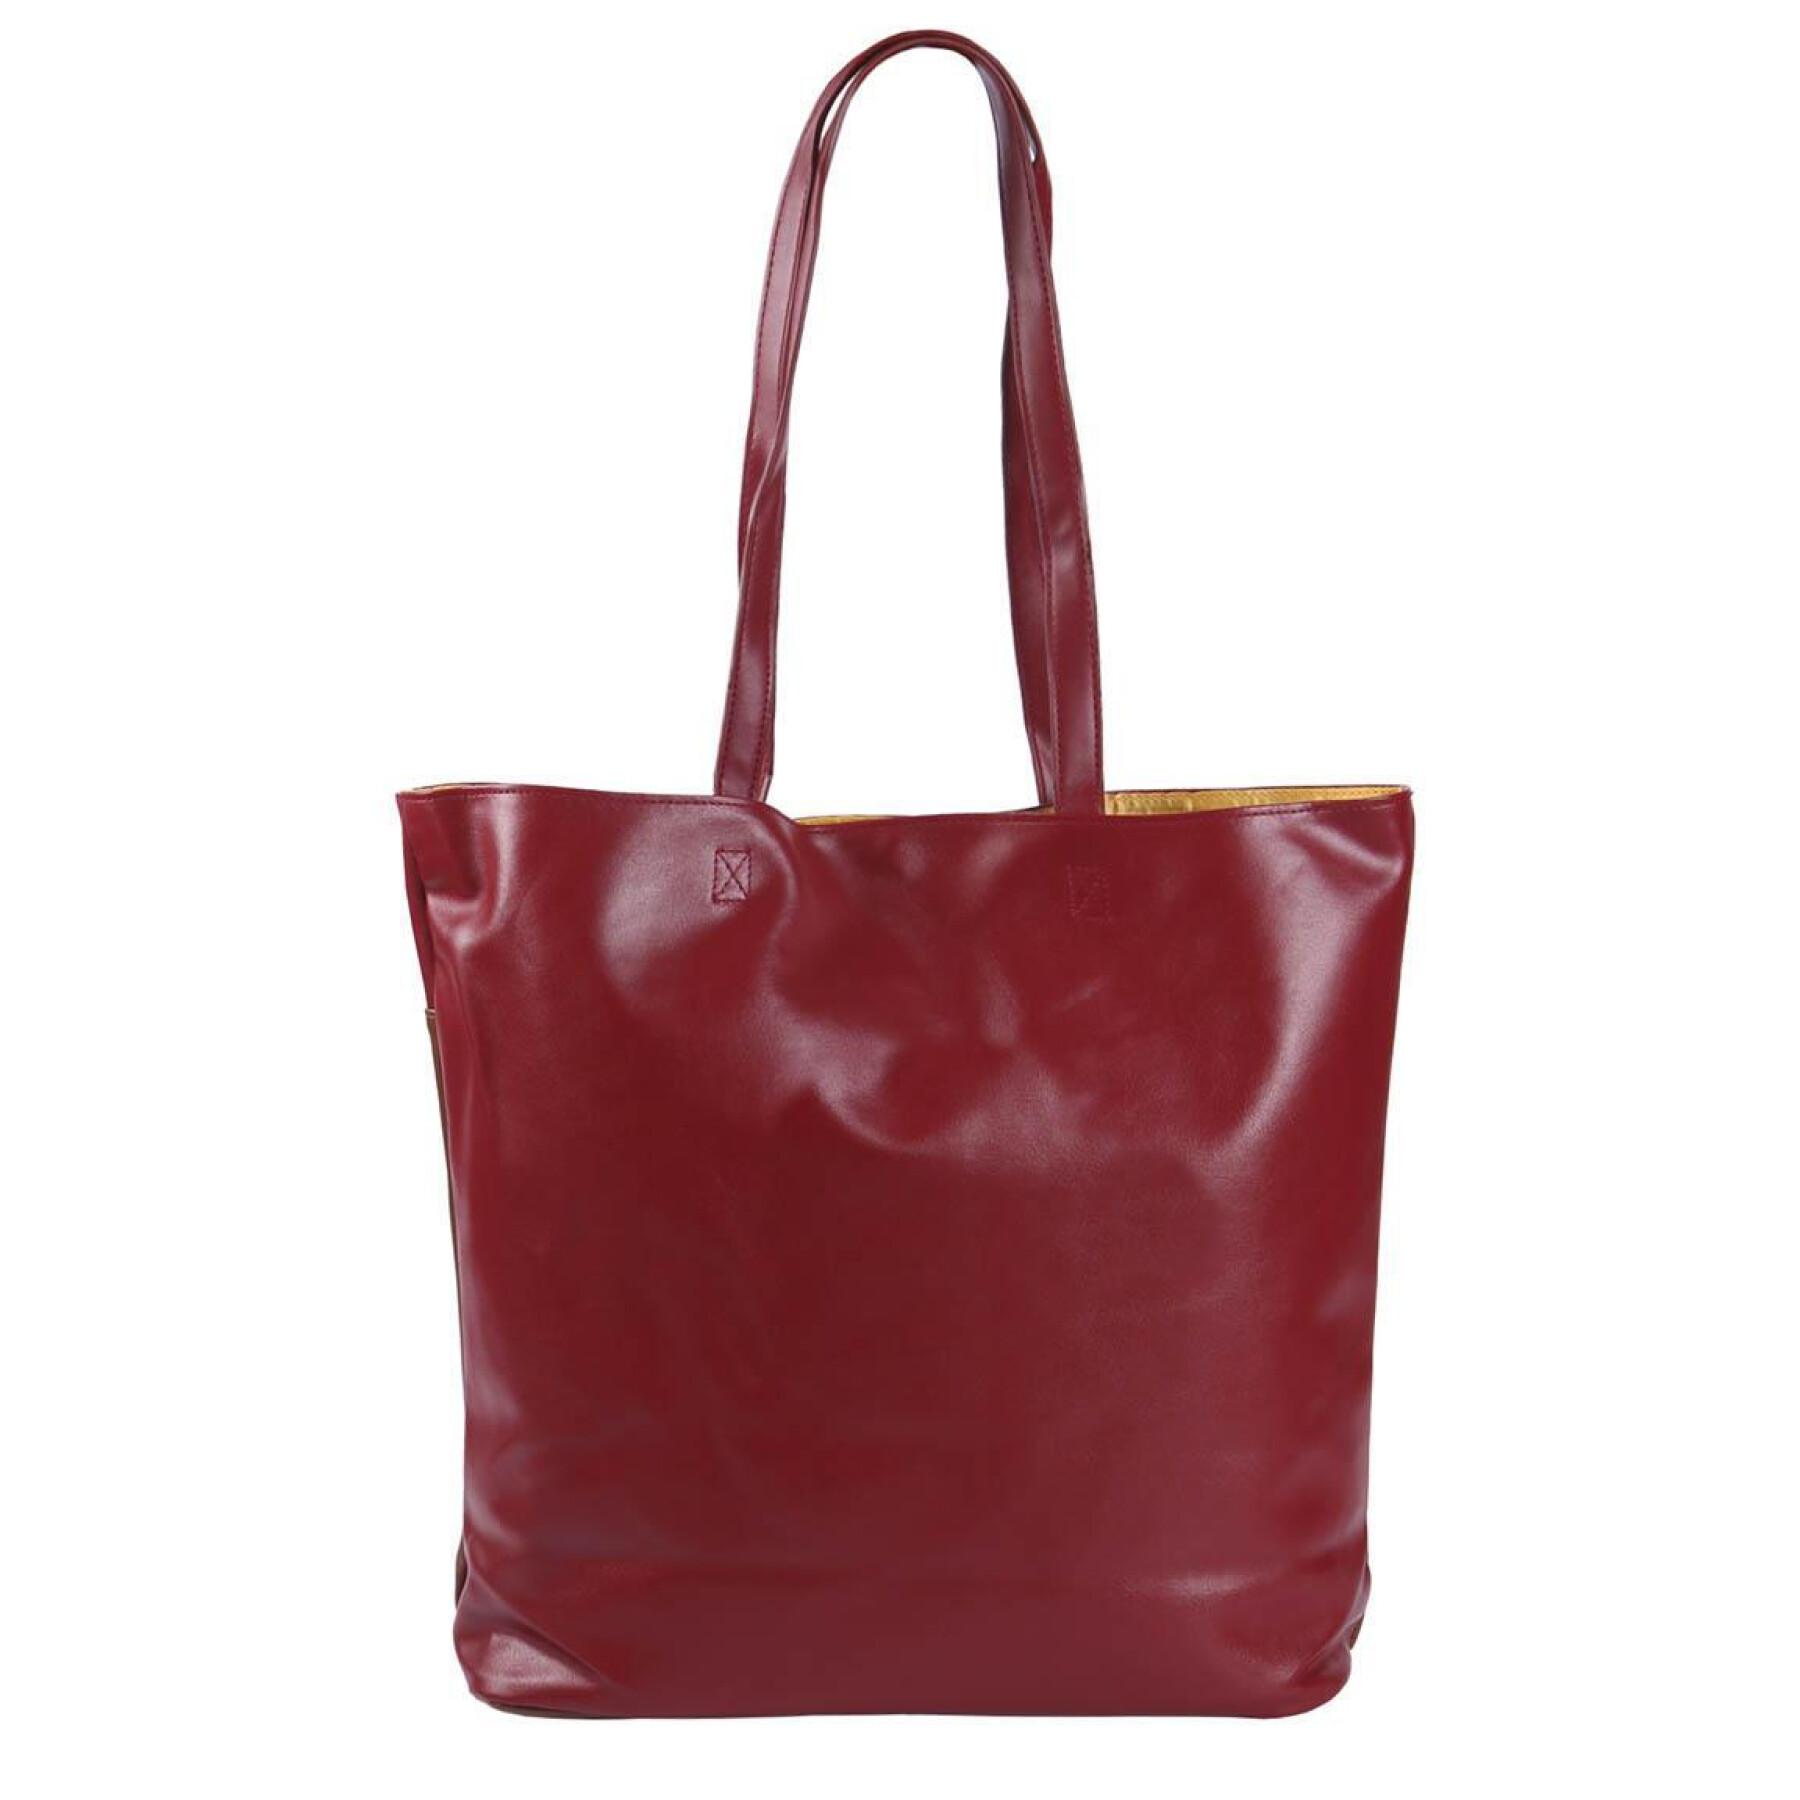 Women's leatherette shopping bag Cerda Harry Potter